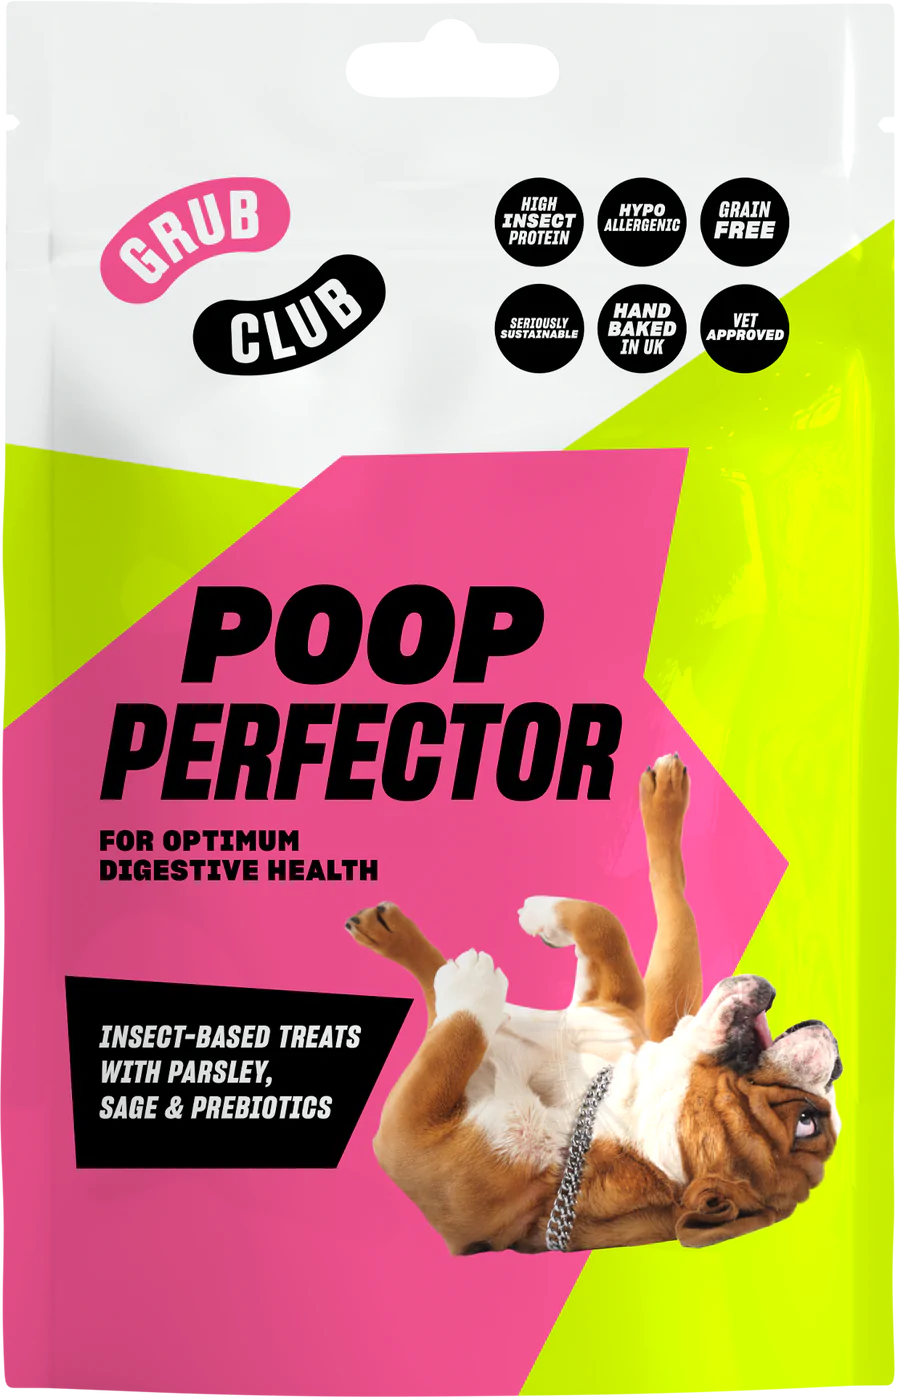 Grub Club Poop Perfector